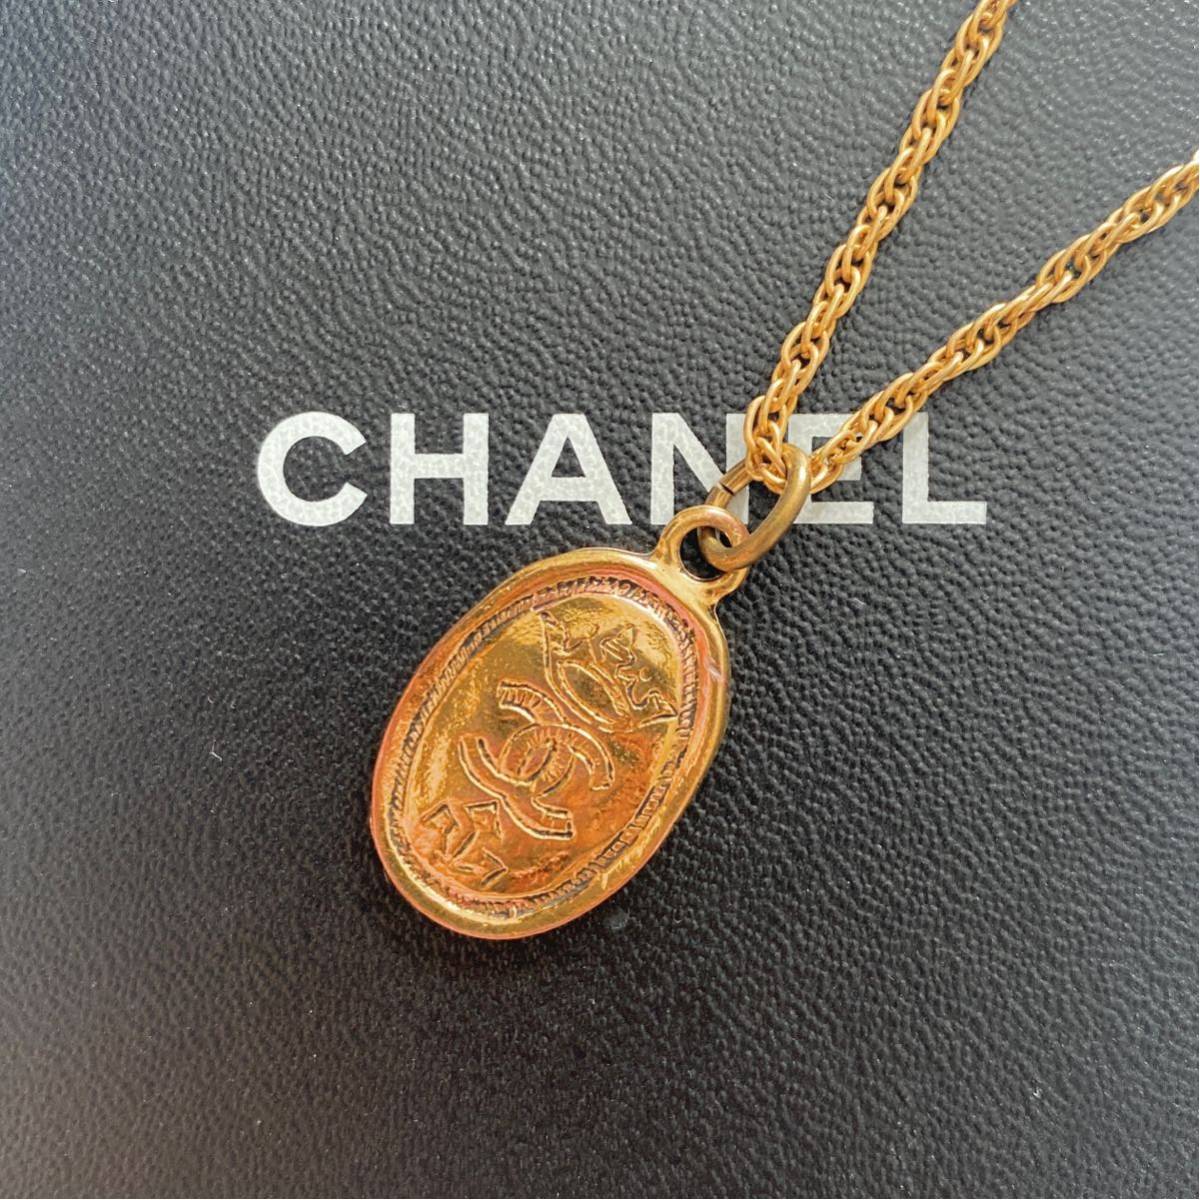 CHANEL Chanel Chanel колье plate здесь Mark .. Gold цвет золотой vintage Vintage accessory jewelry ювелирные изделия 